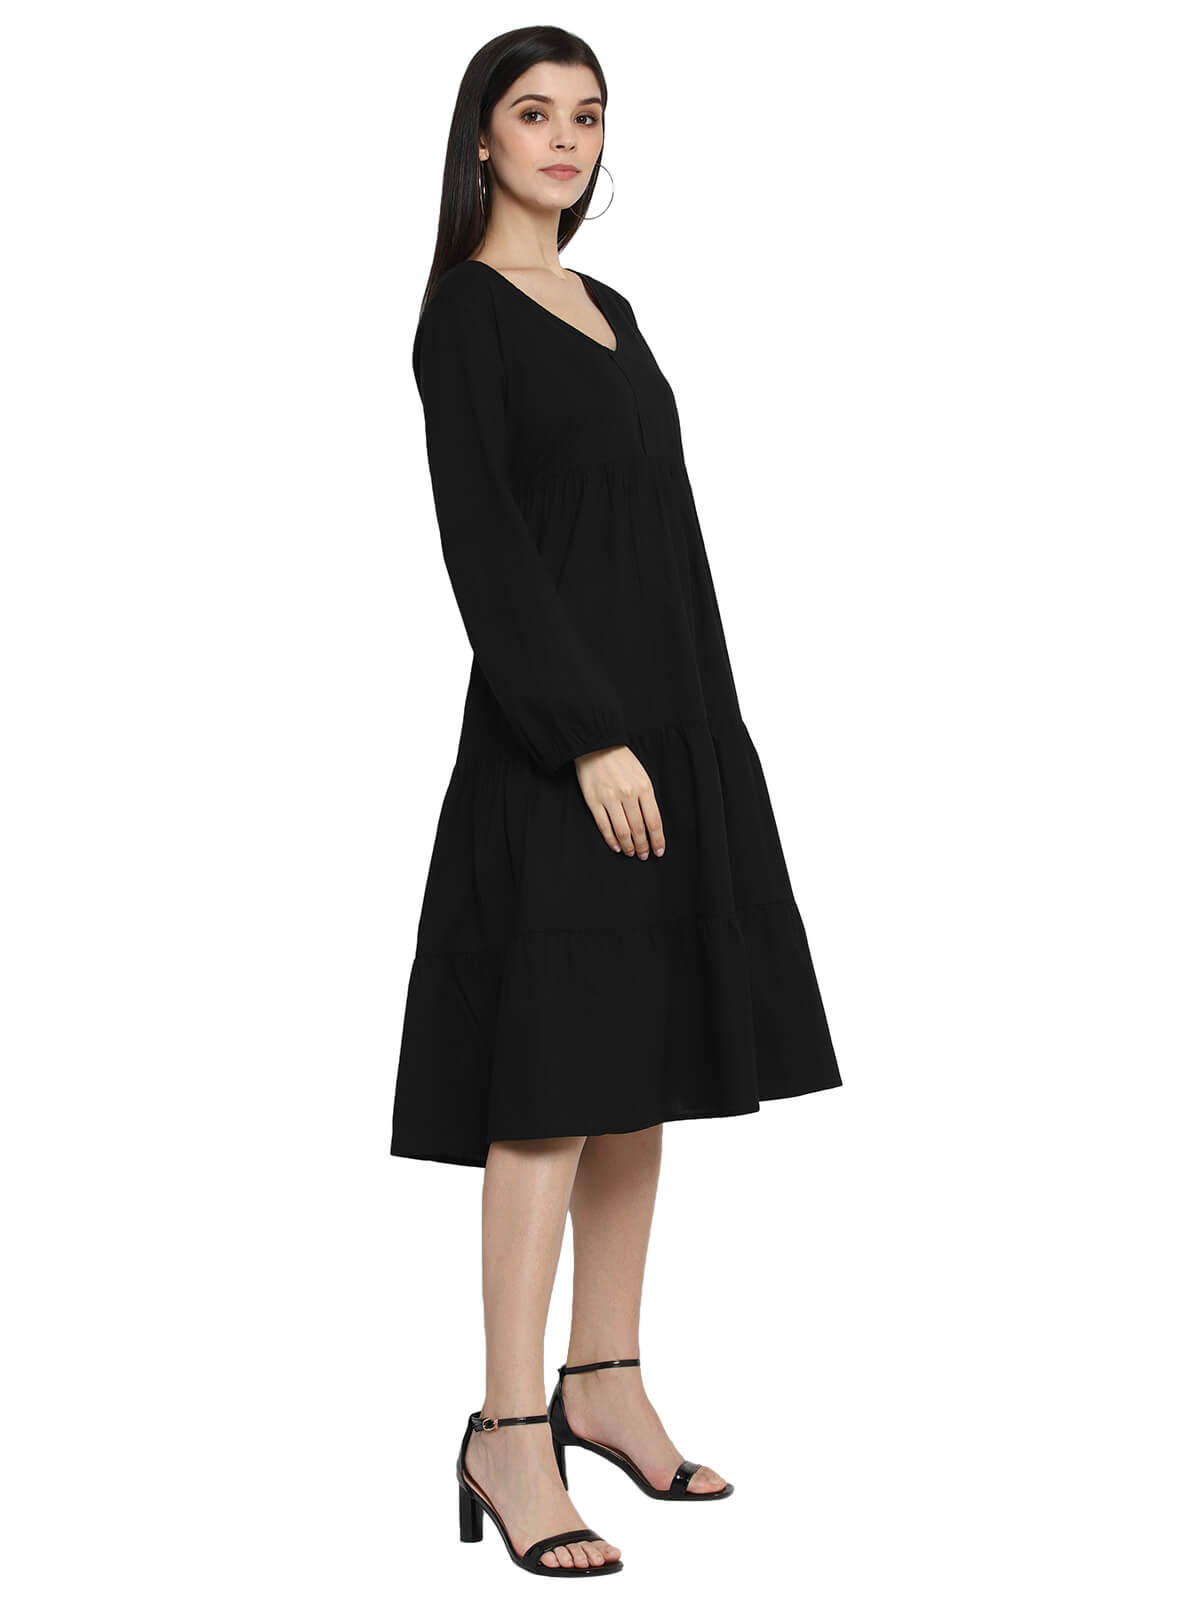 Msfq Black Solid Cotton Midi Dress